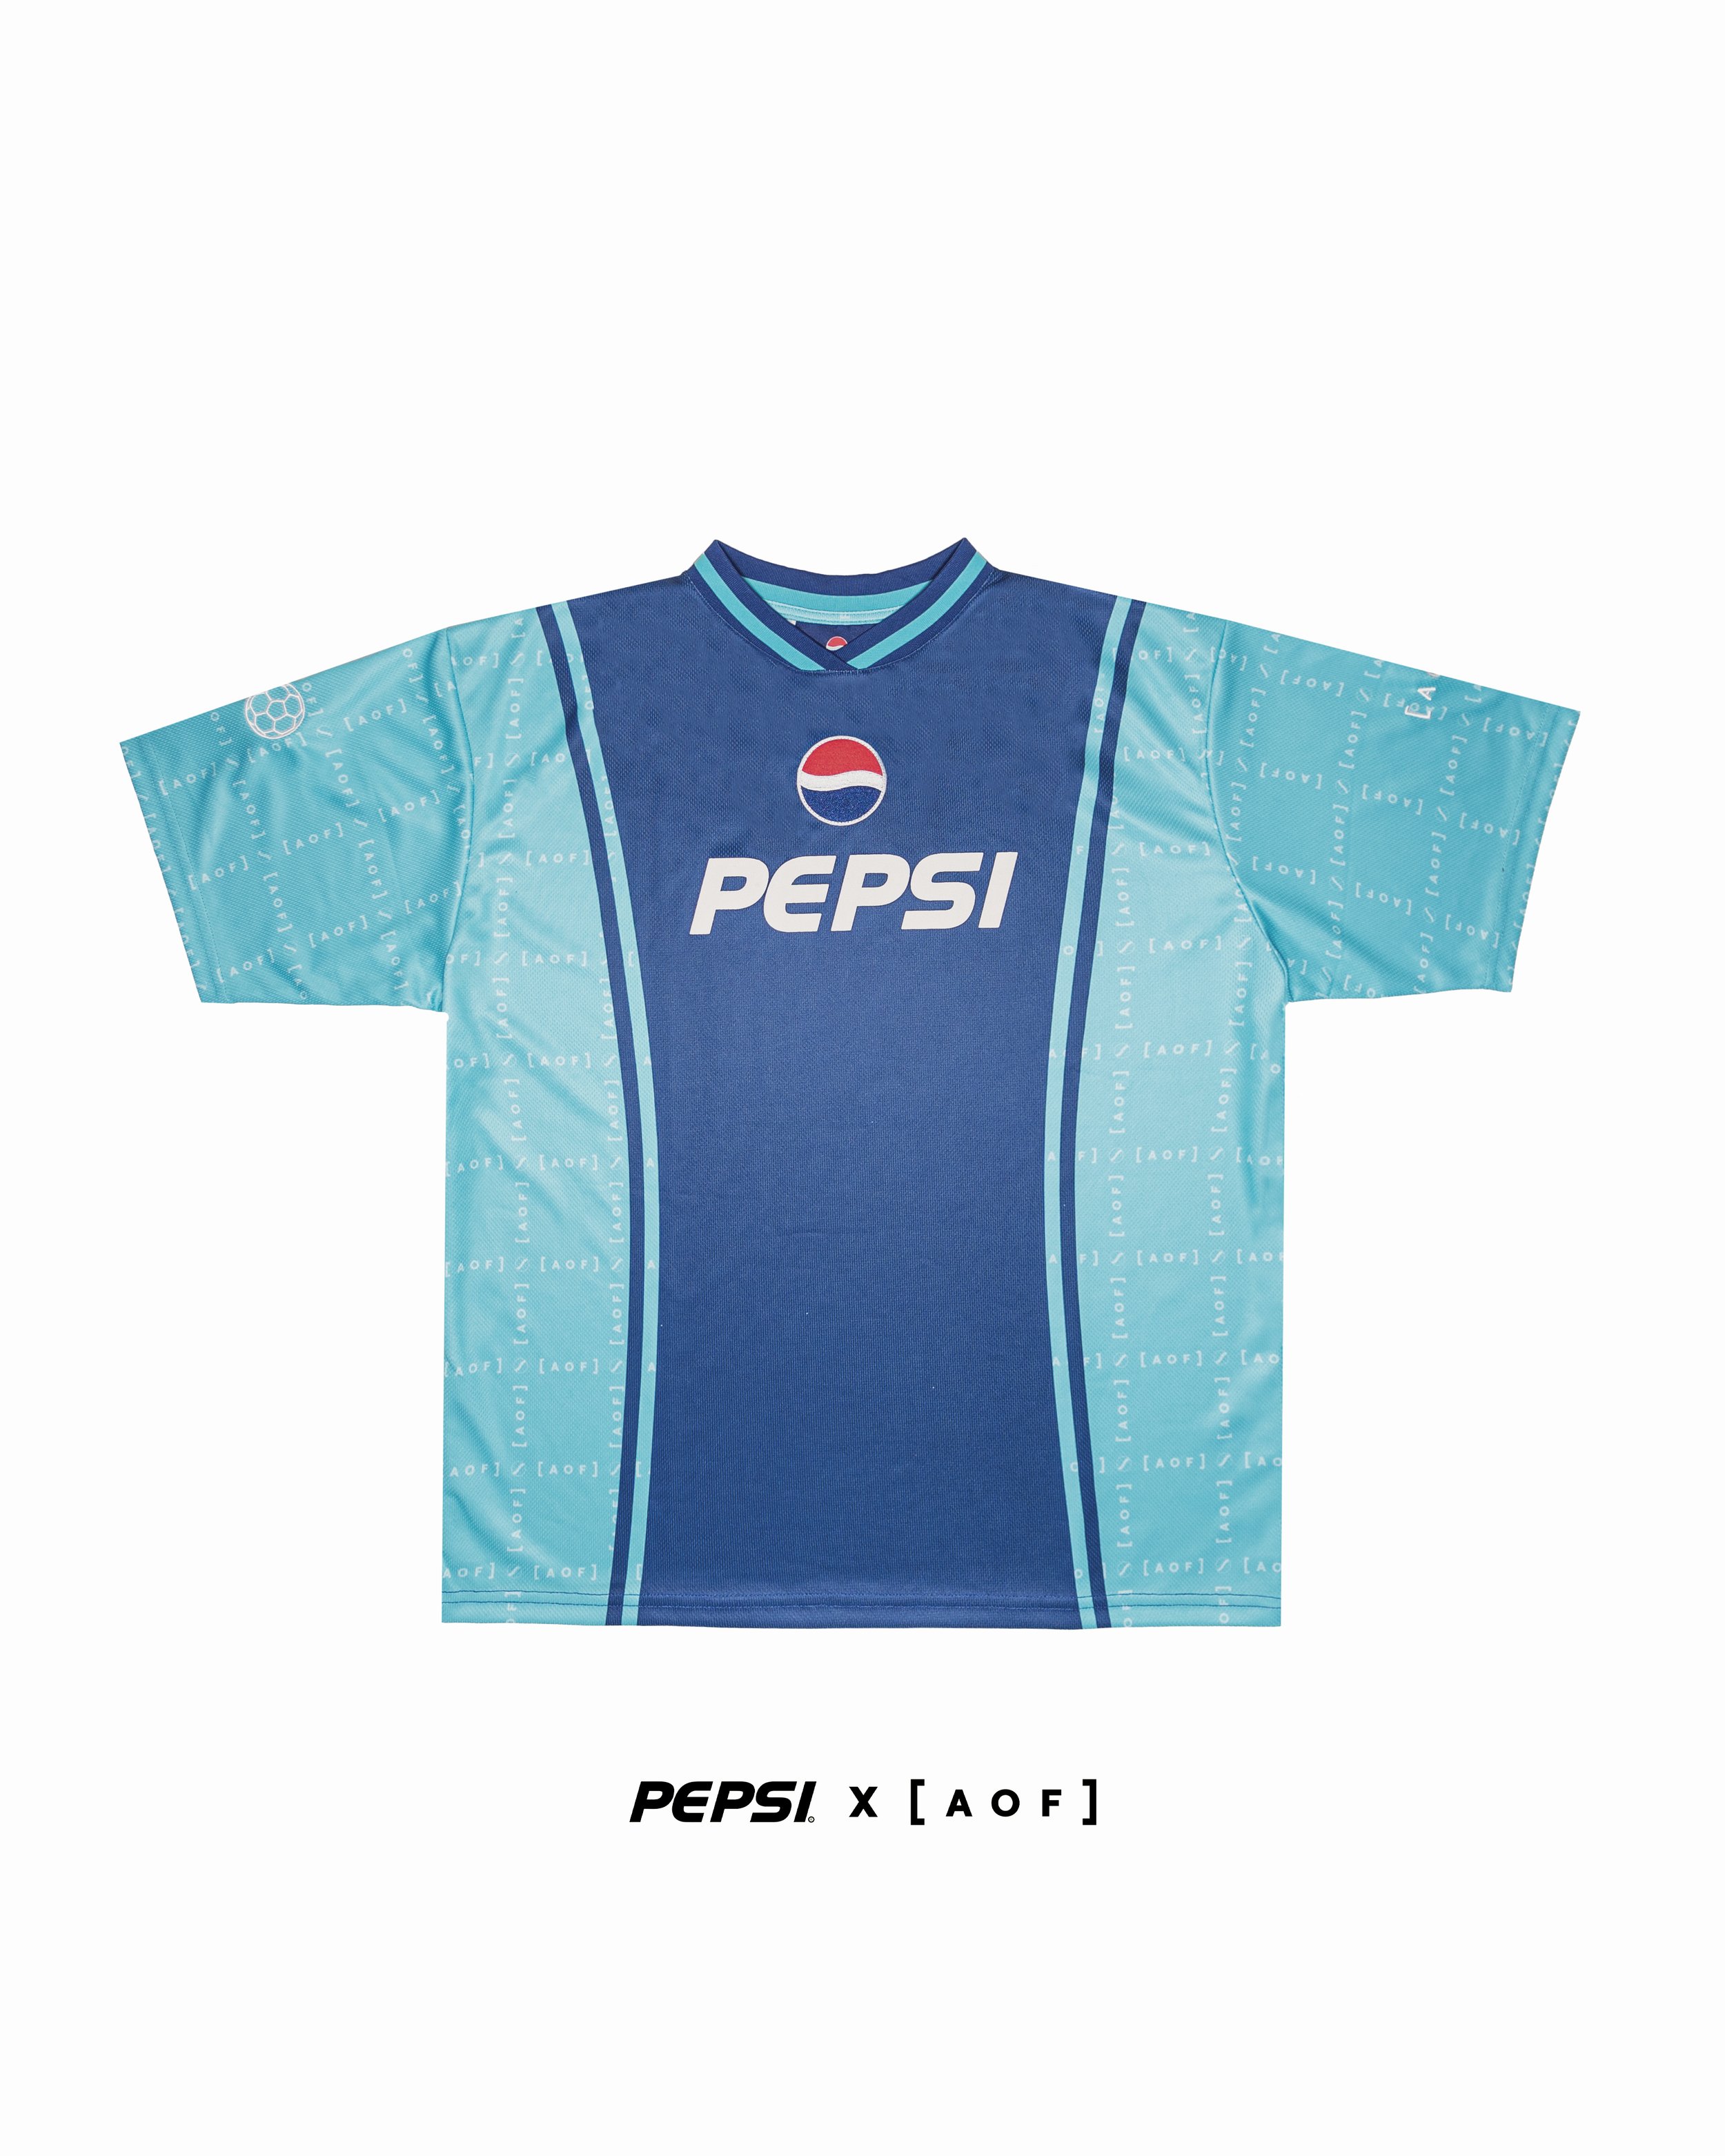 Pepsi X AOF_ Jersey_£50.00_www.art-of-football.com (1).jpg